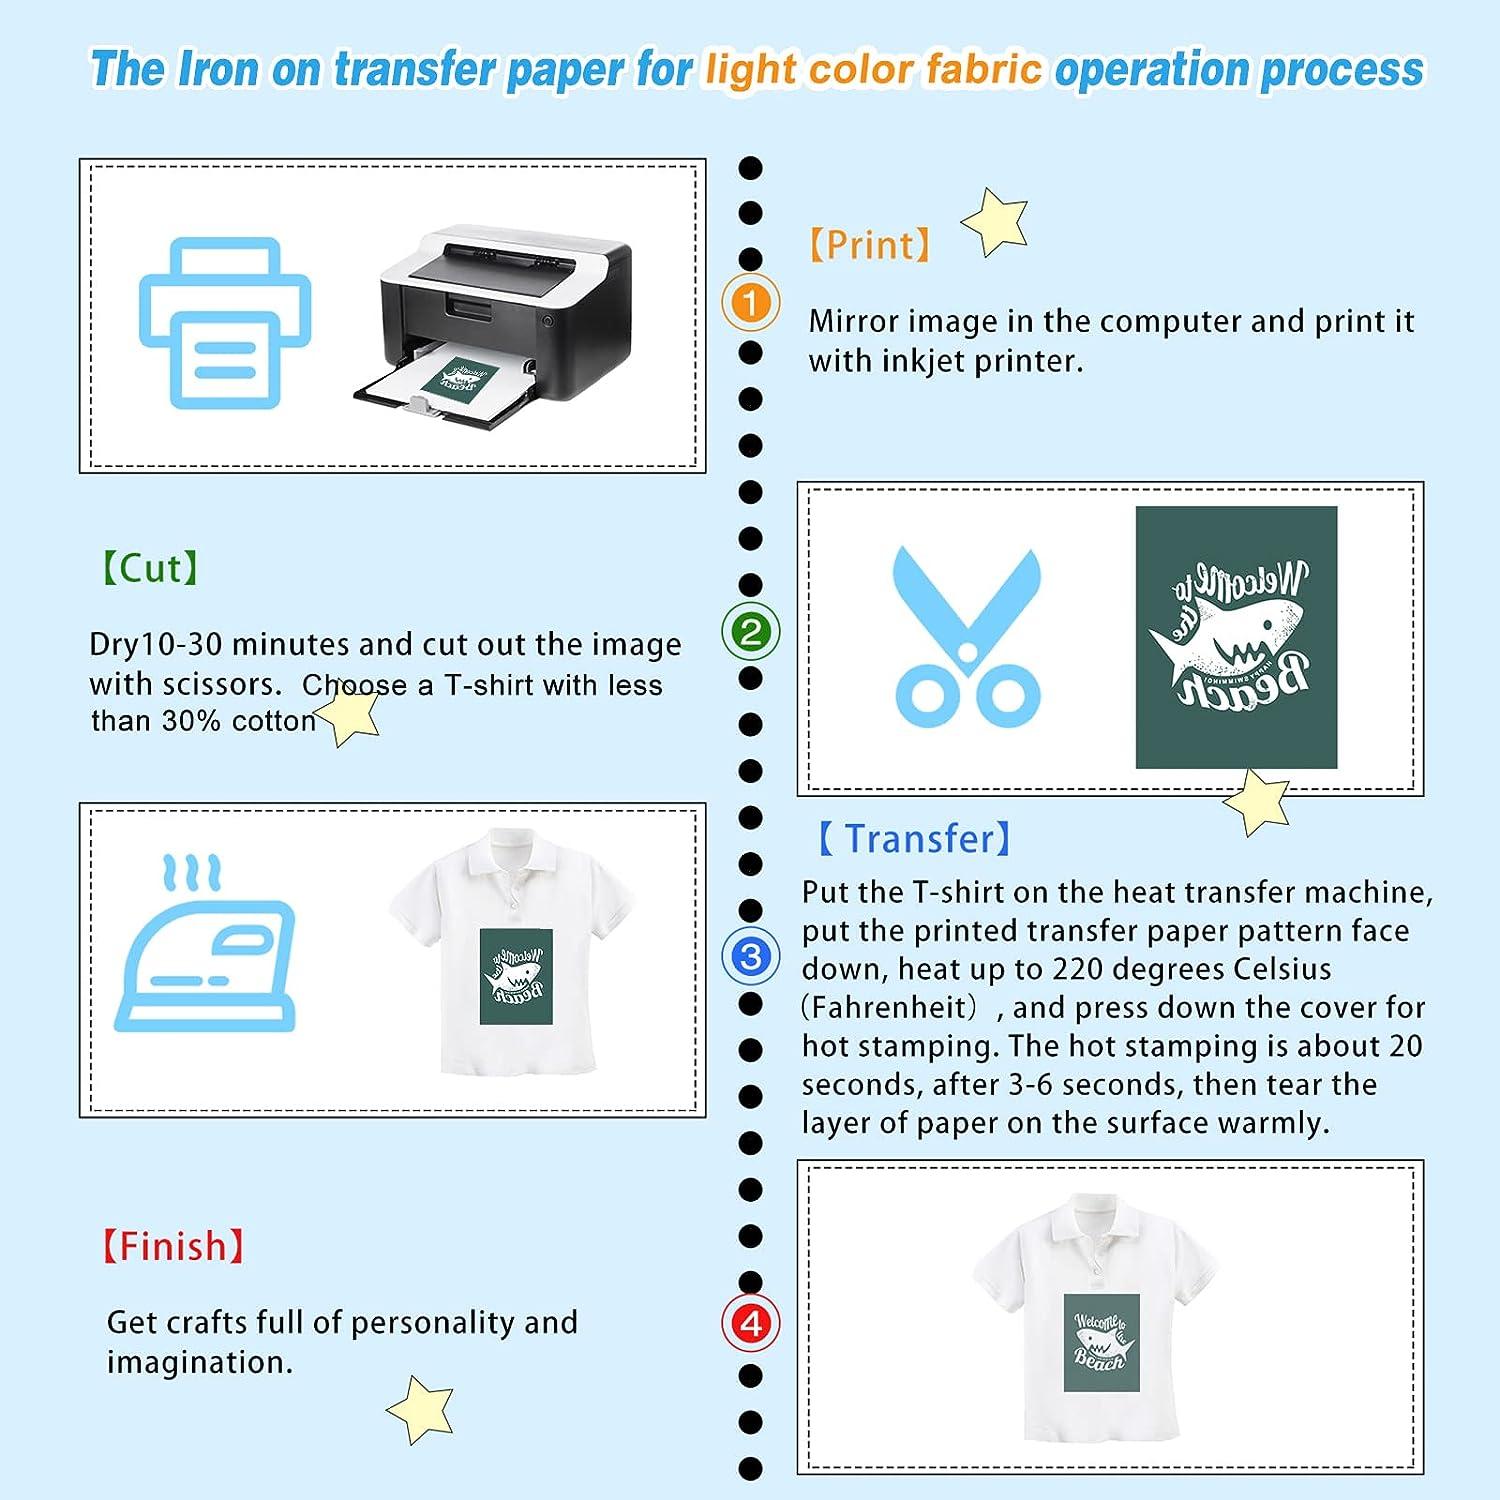 New Inkjet Iron-On Heat Transfer Paper For Dark fabric 50 Sheets